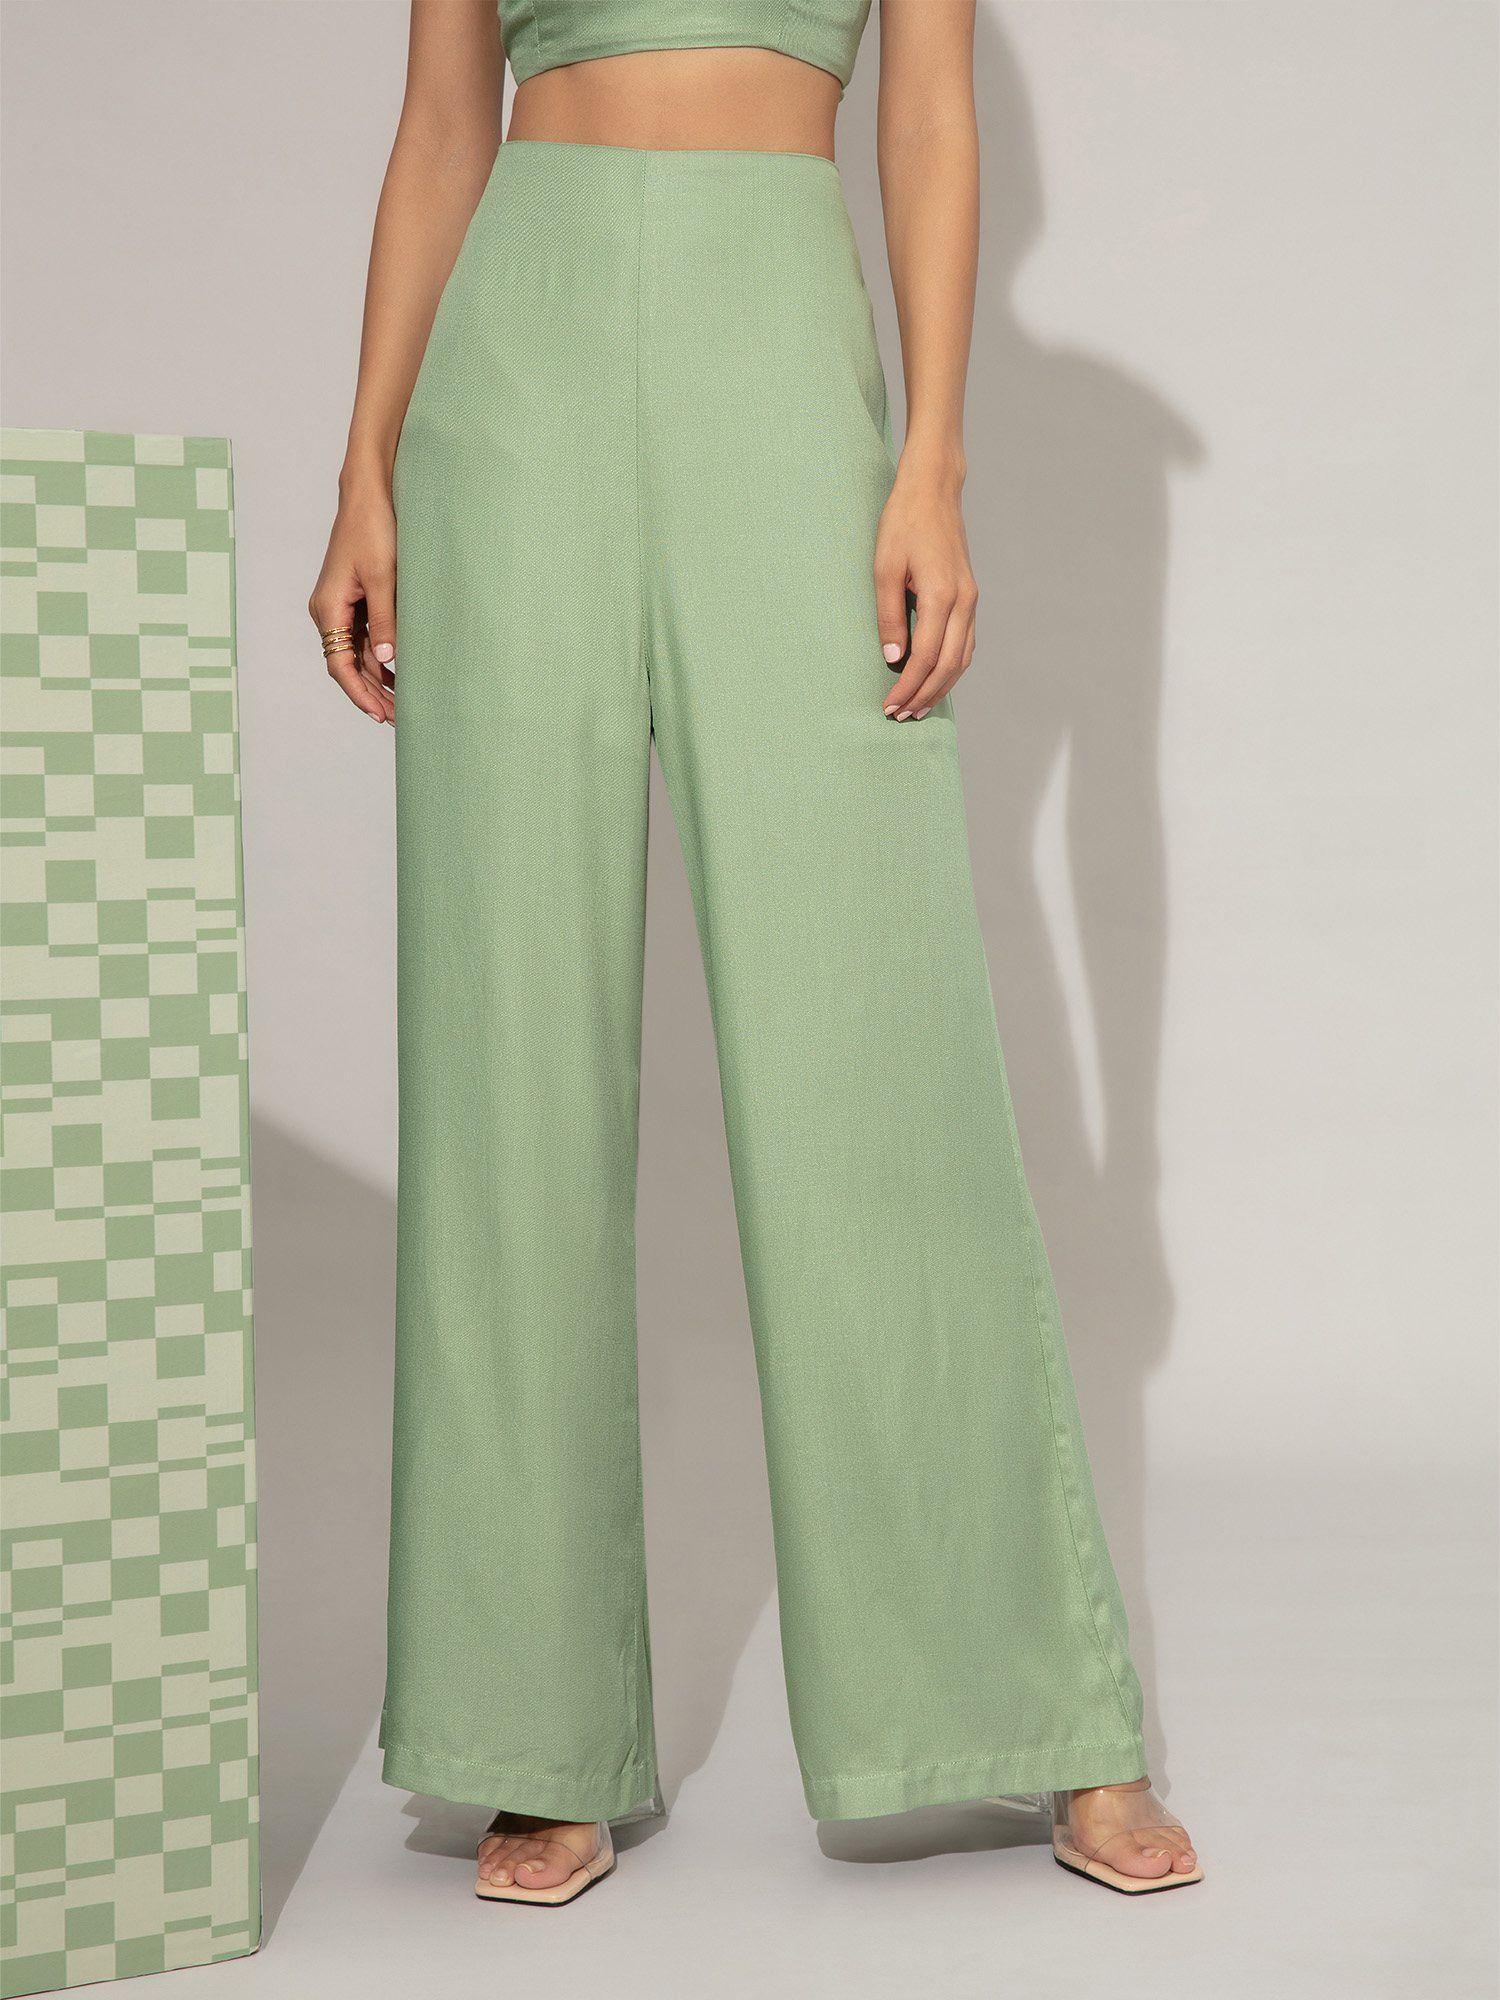 mint green solid wide legged pants